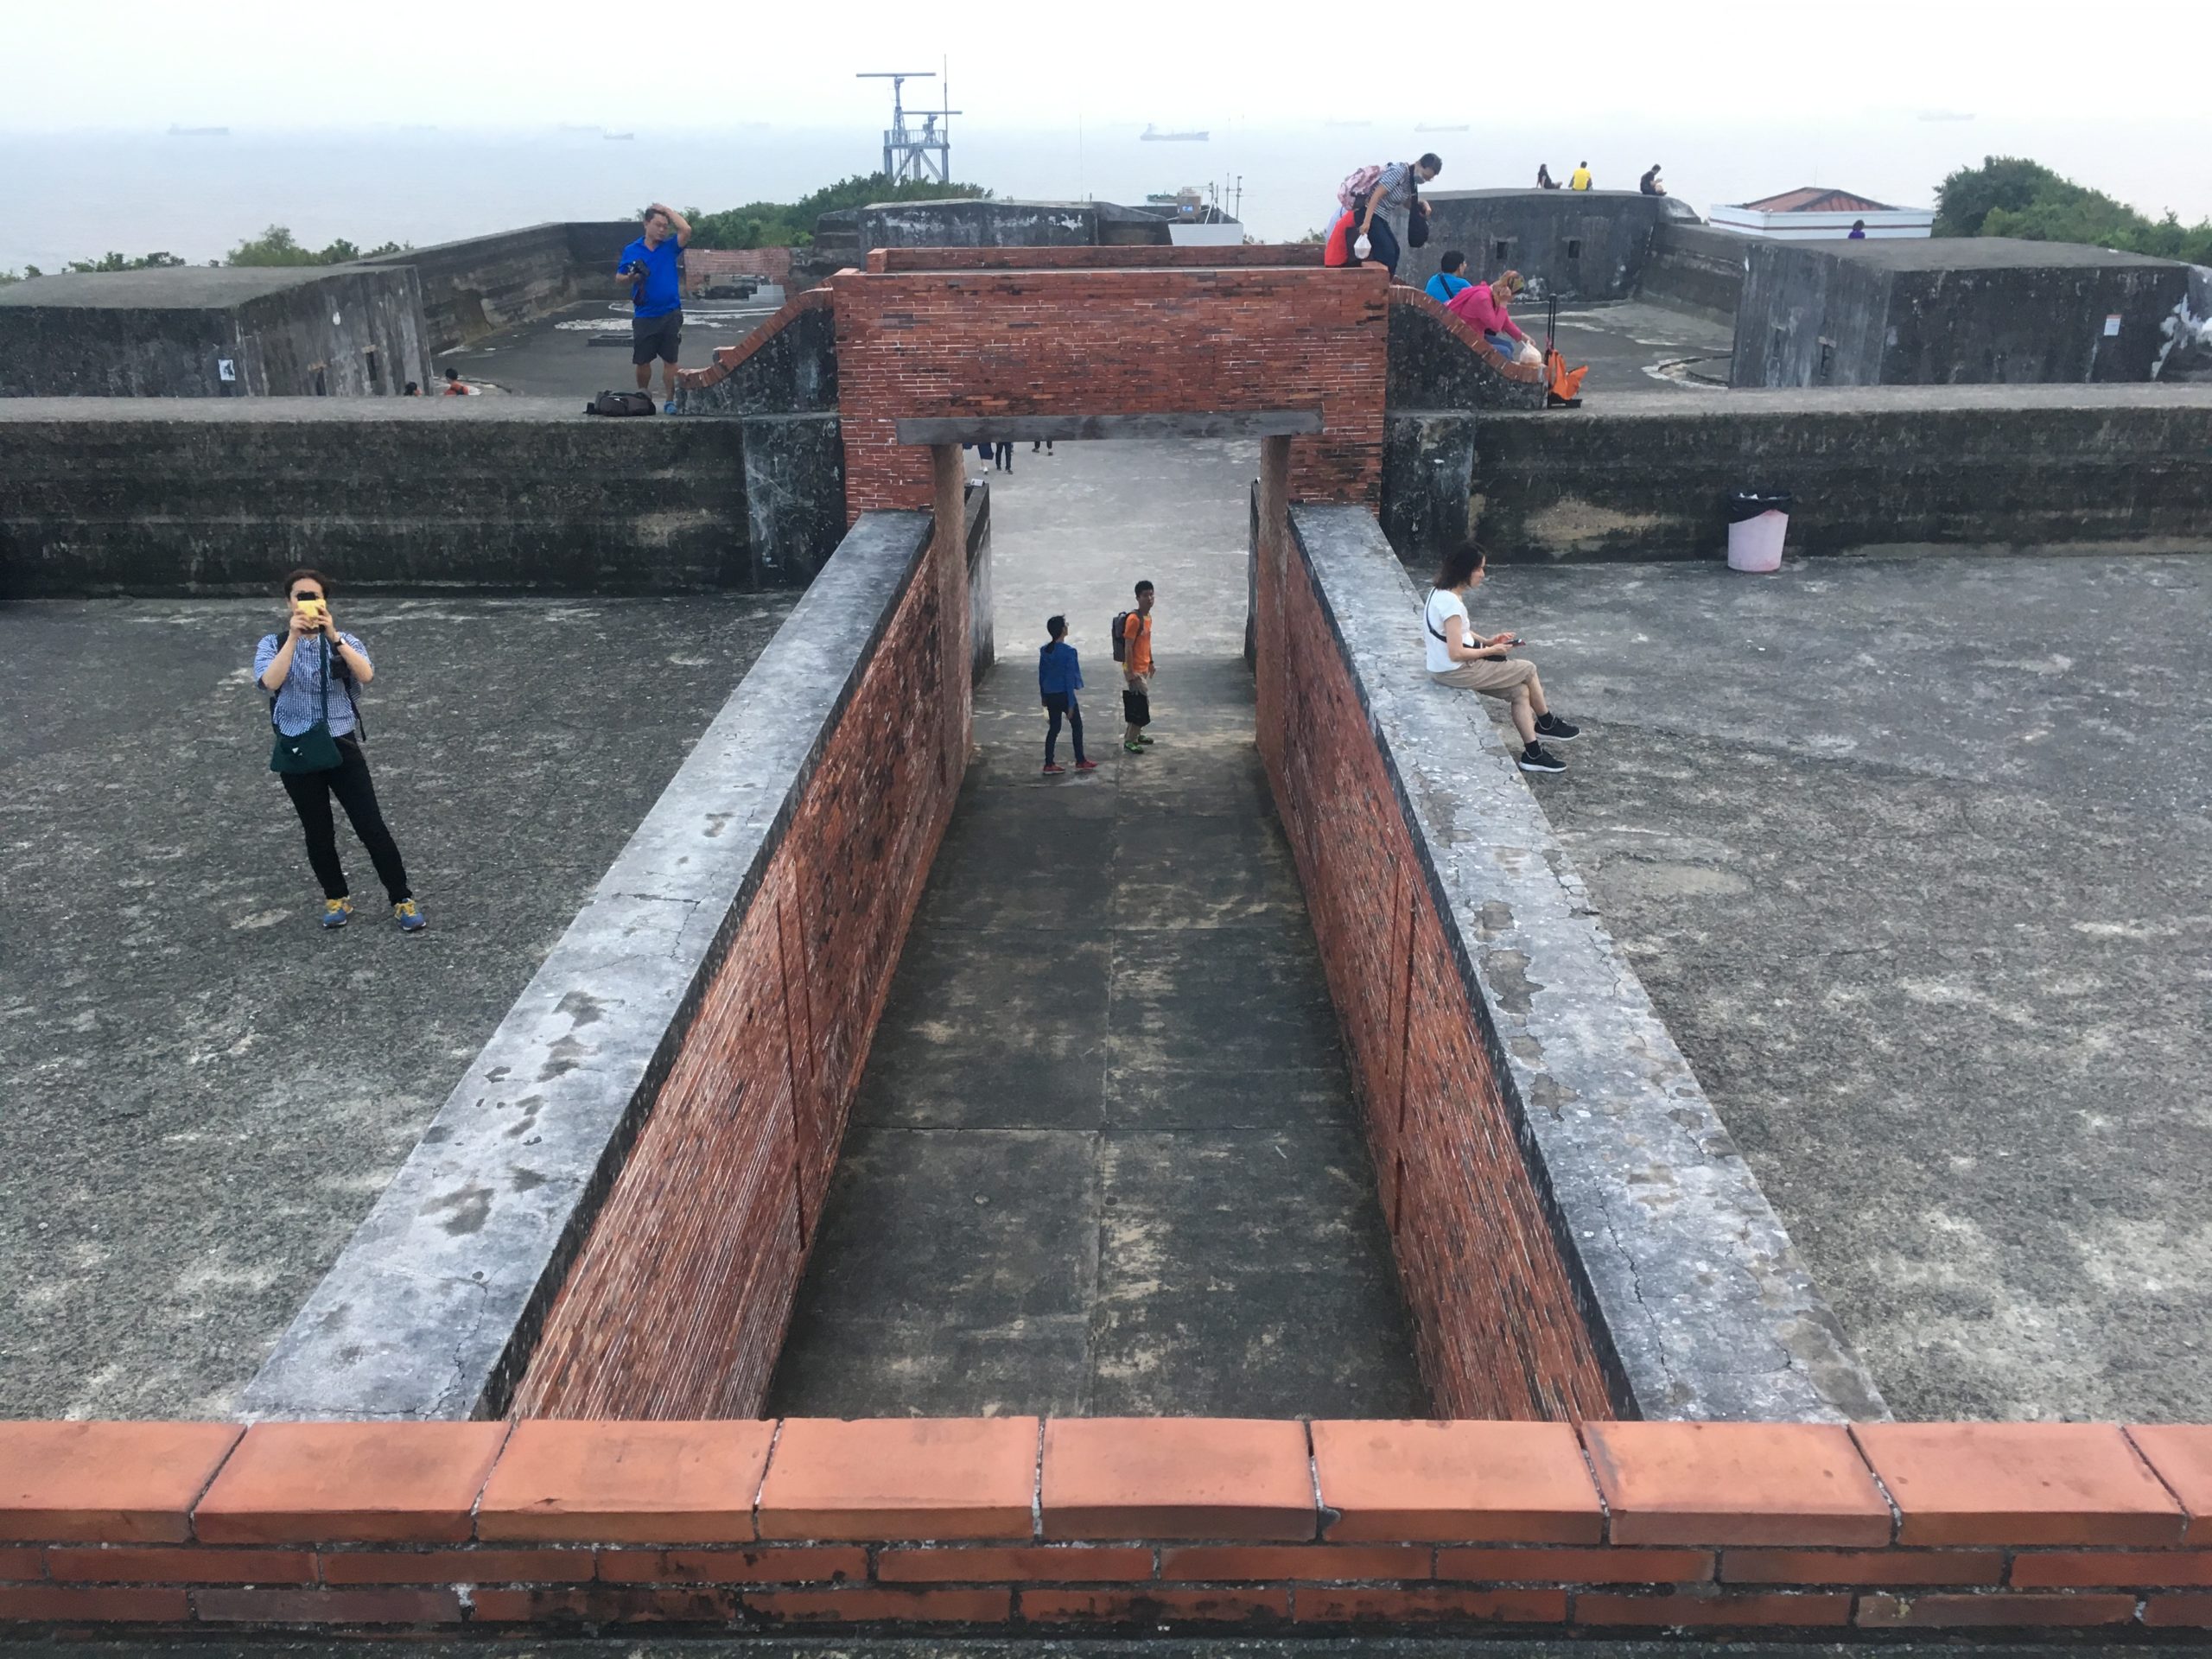 Cijin Fort at tip of Cijin Island